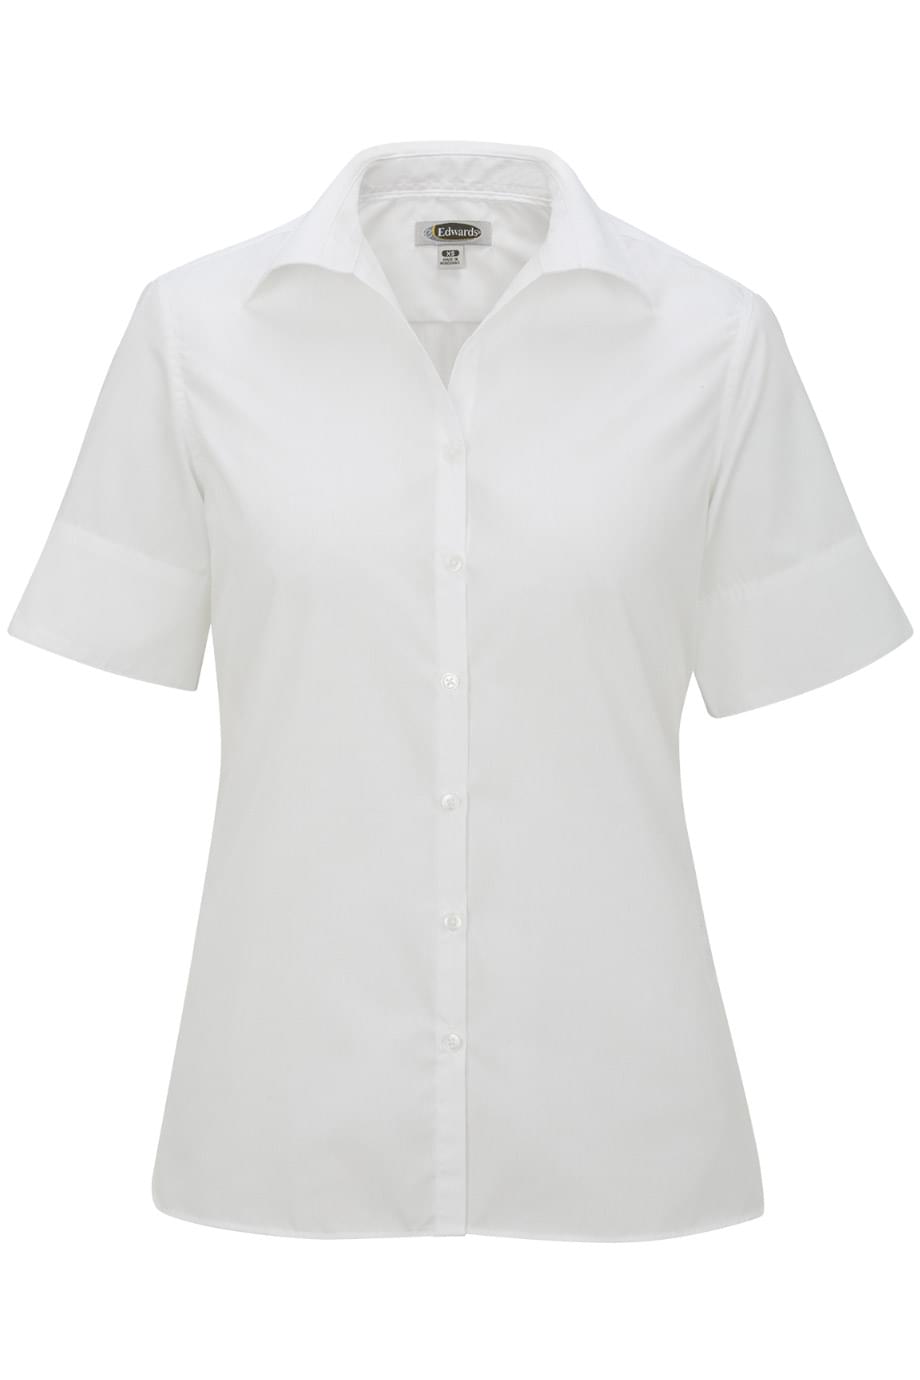 Edwards Garment 5245 - Women's Open Neck Poplin Short Sleeve Blouse